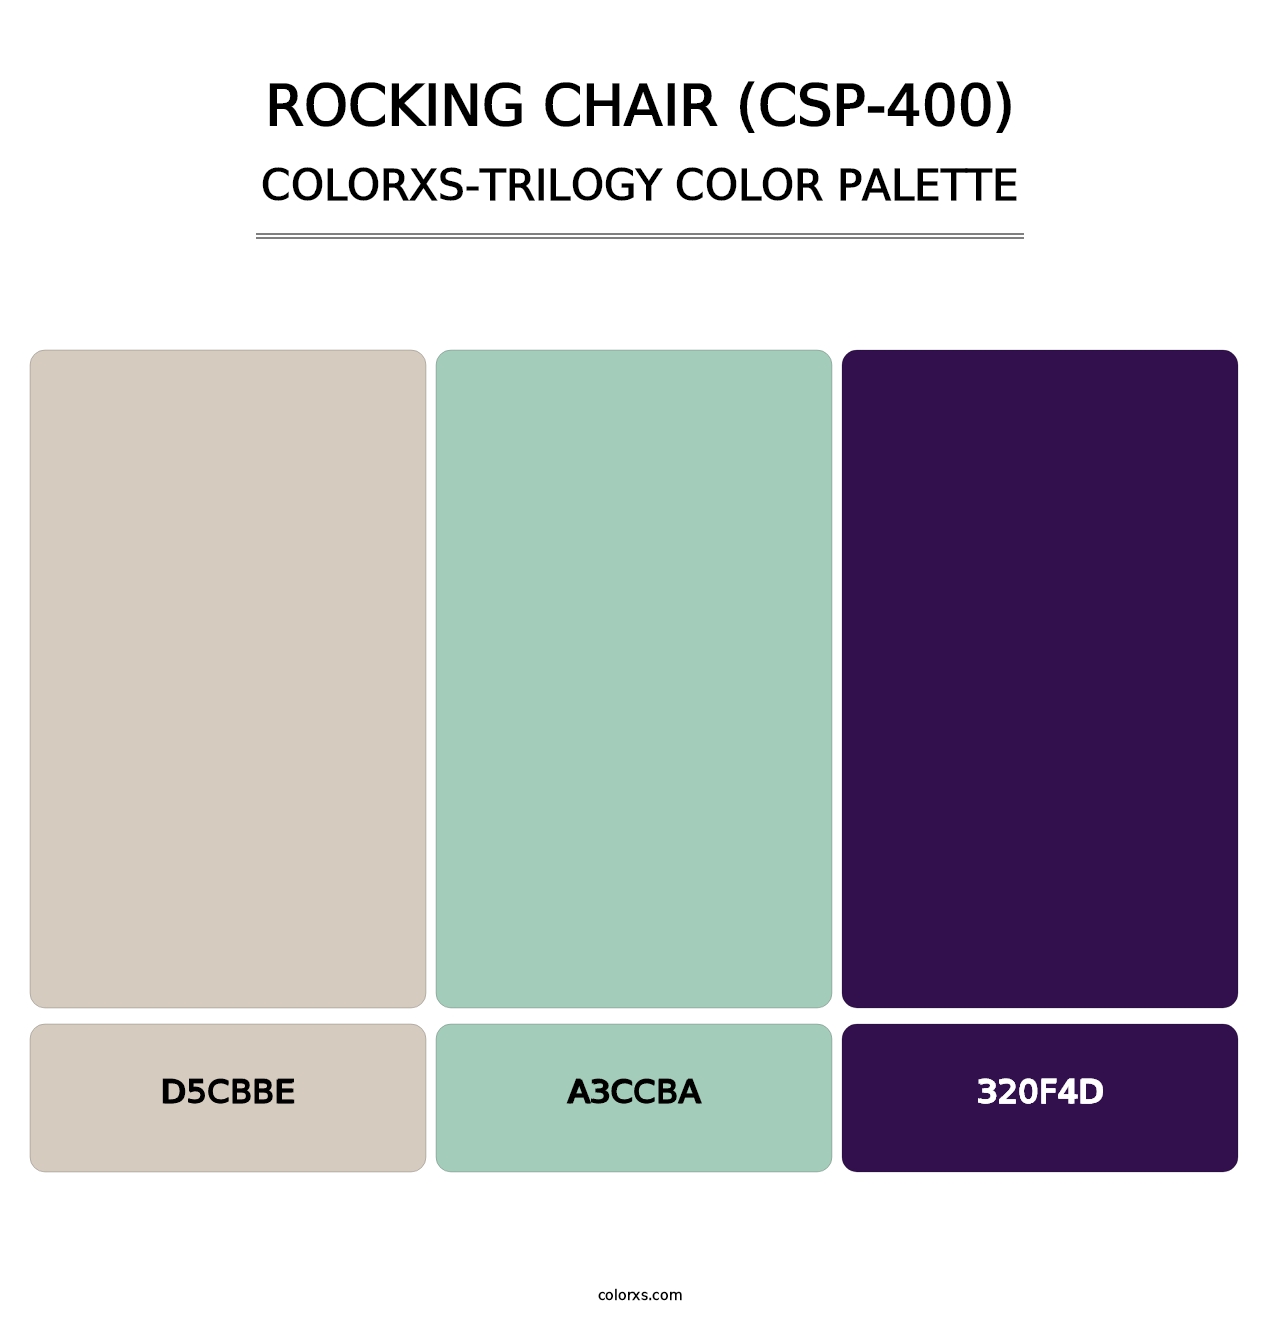 Rocking Chair (CSP-400) - Colorxs Trilogy Palette